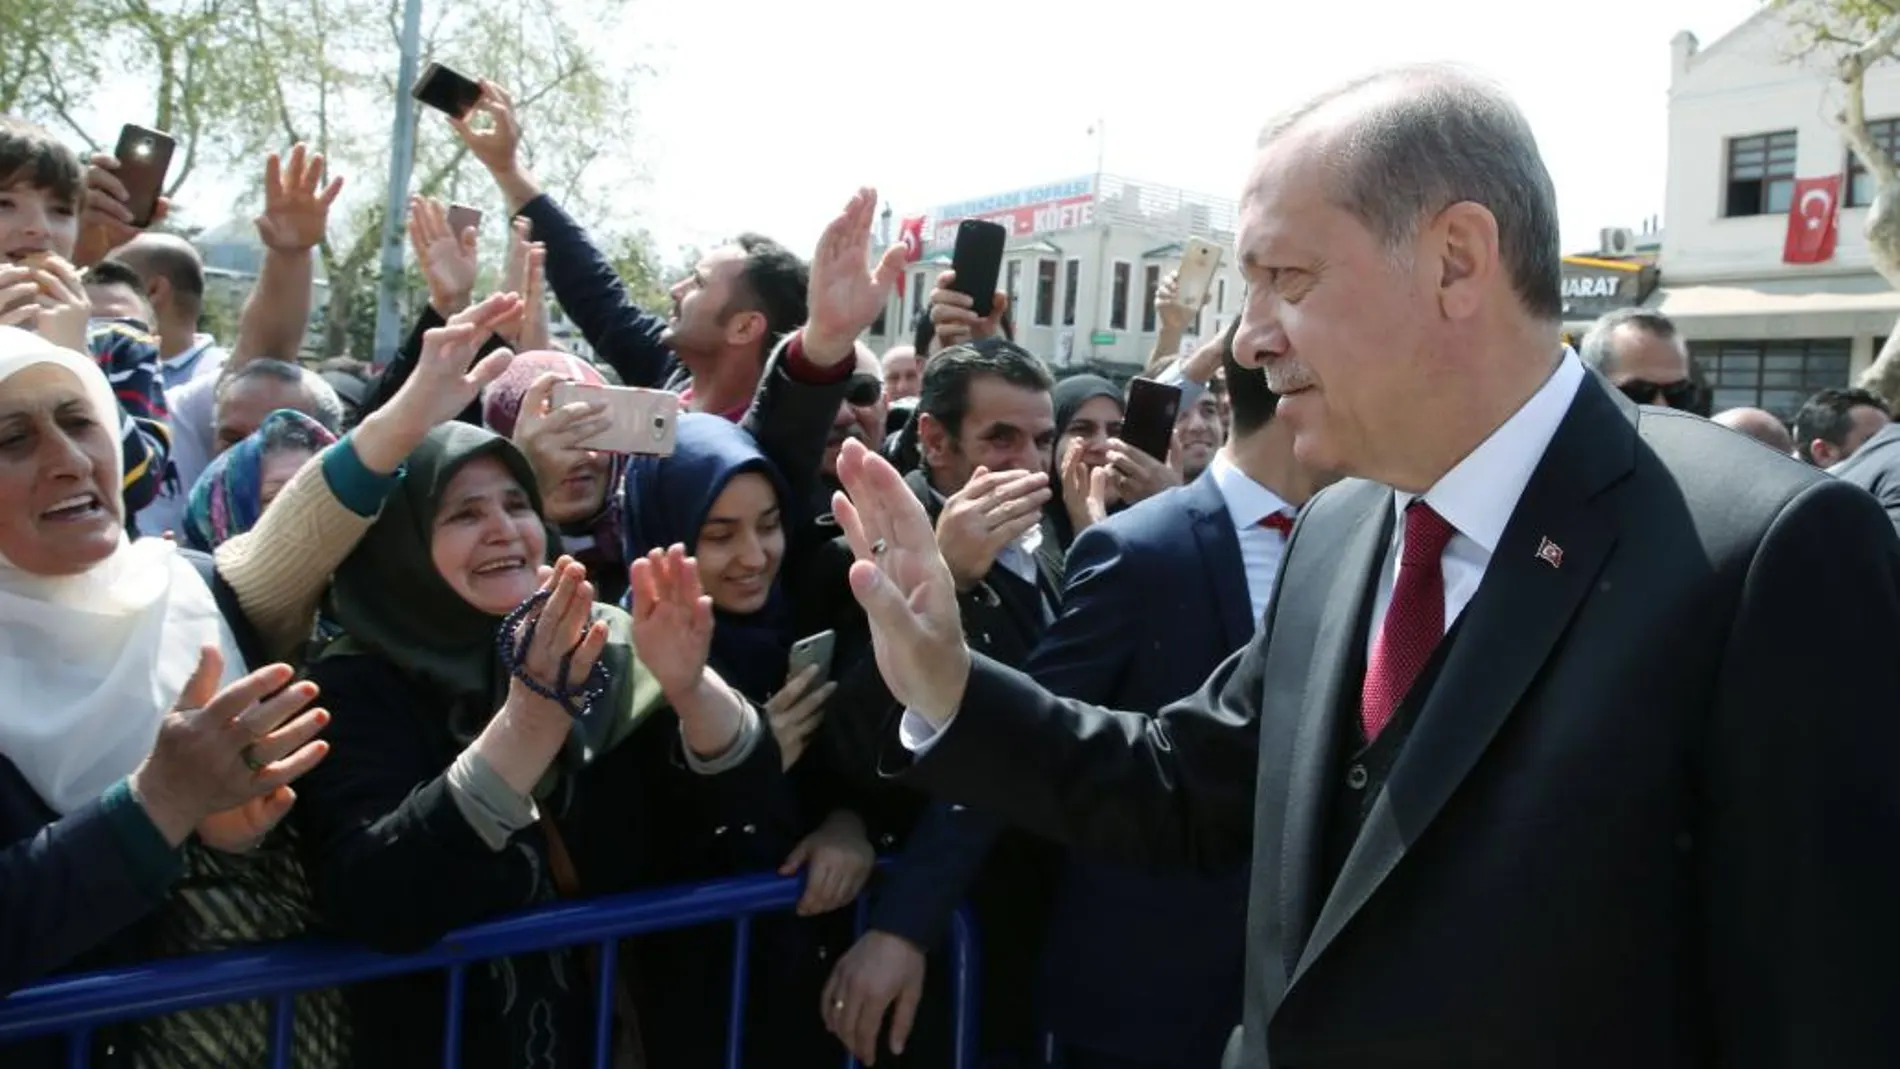 El presidente turco Tayyip Erdogan celebra su victoria